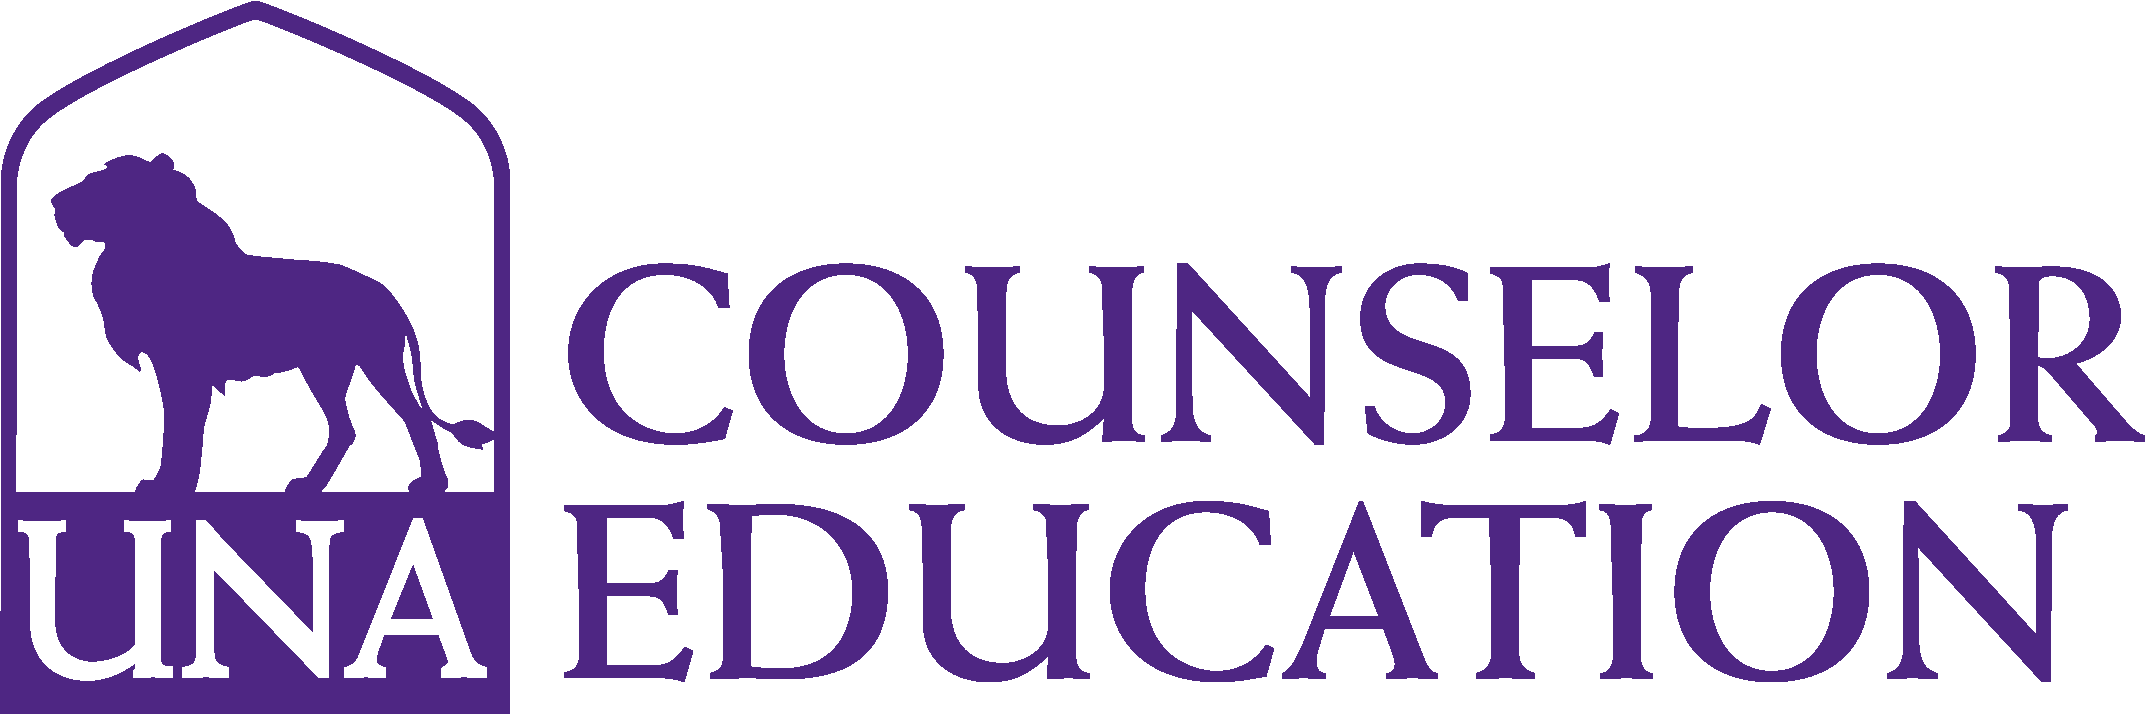 counselor education logo 3